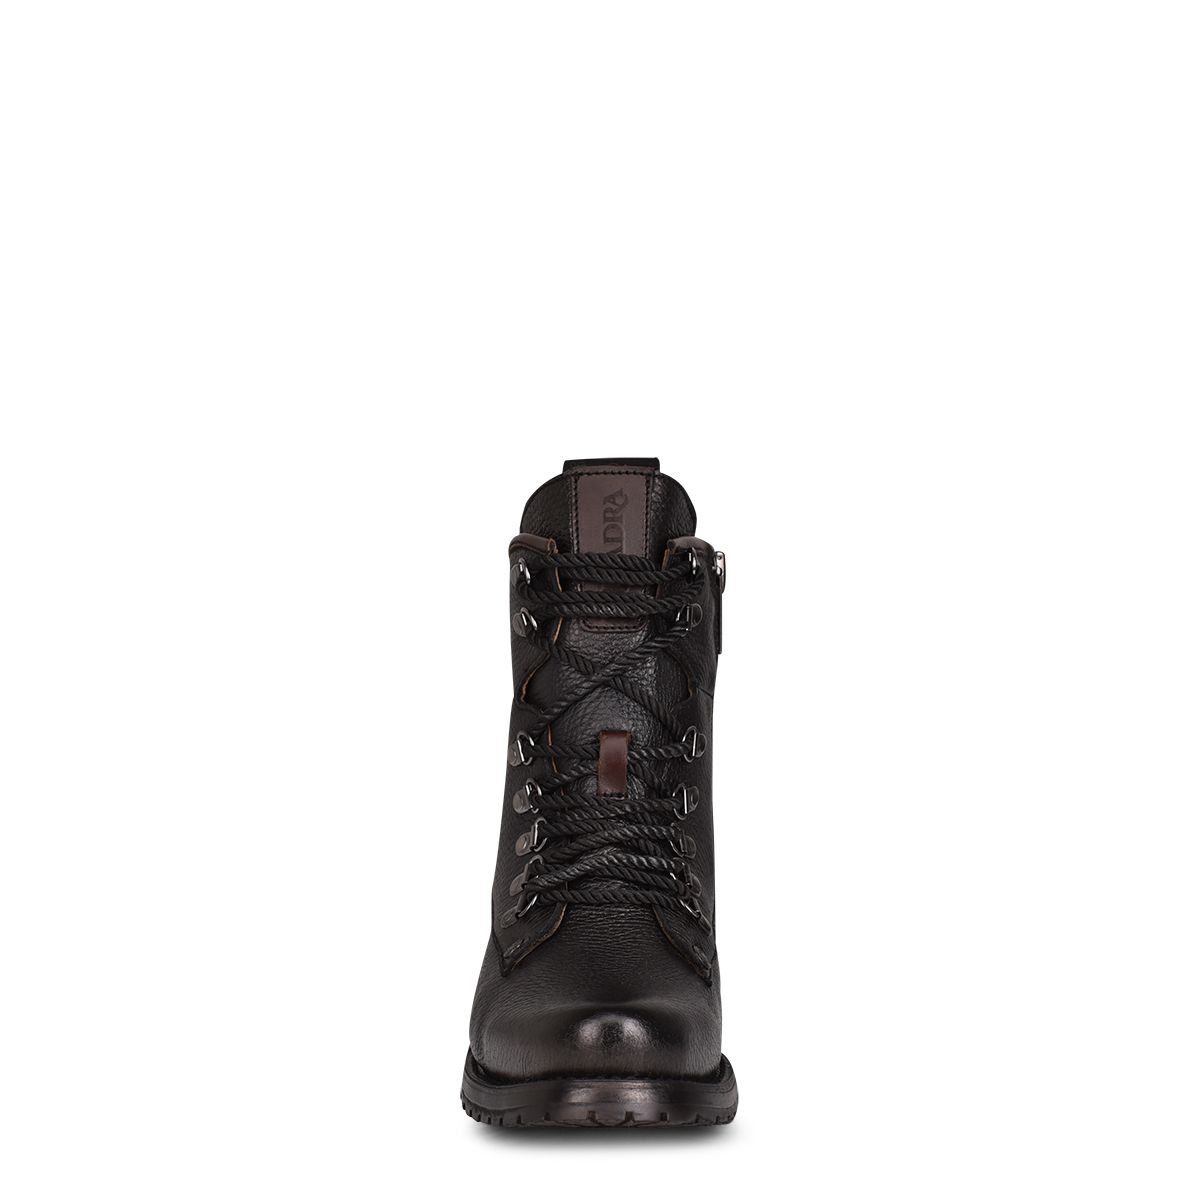 4D10VE - Cuadra black casual vintage fashion deerskin ankle booties for men-CUADRA-Kuet-Cuadra-Boots